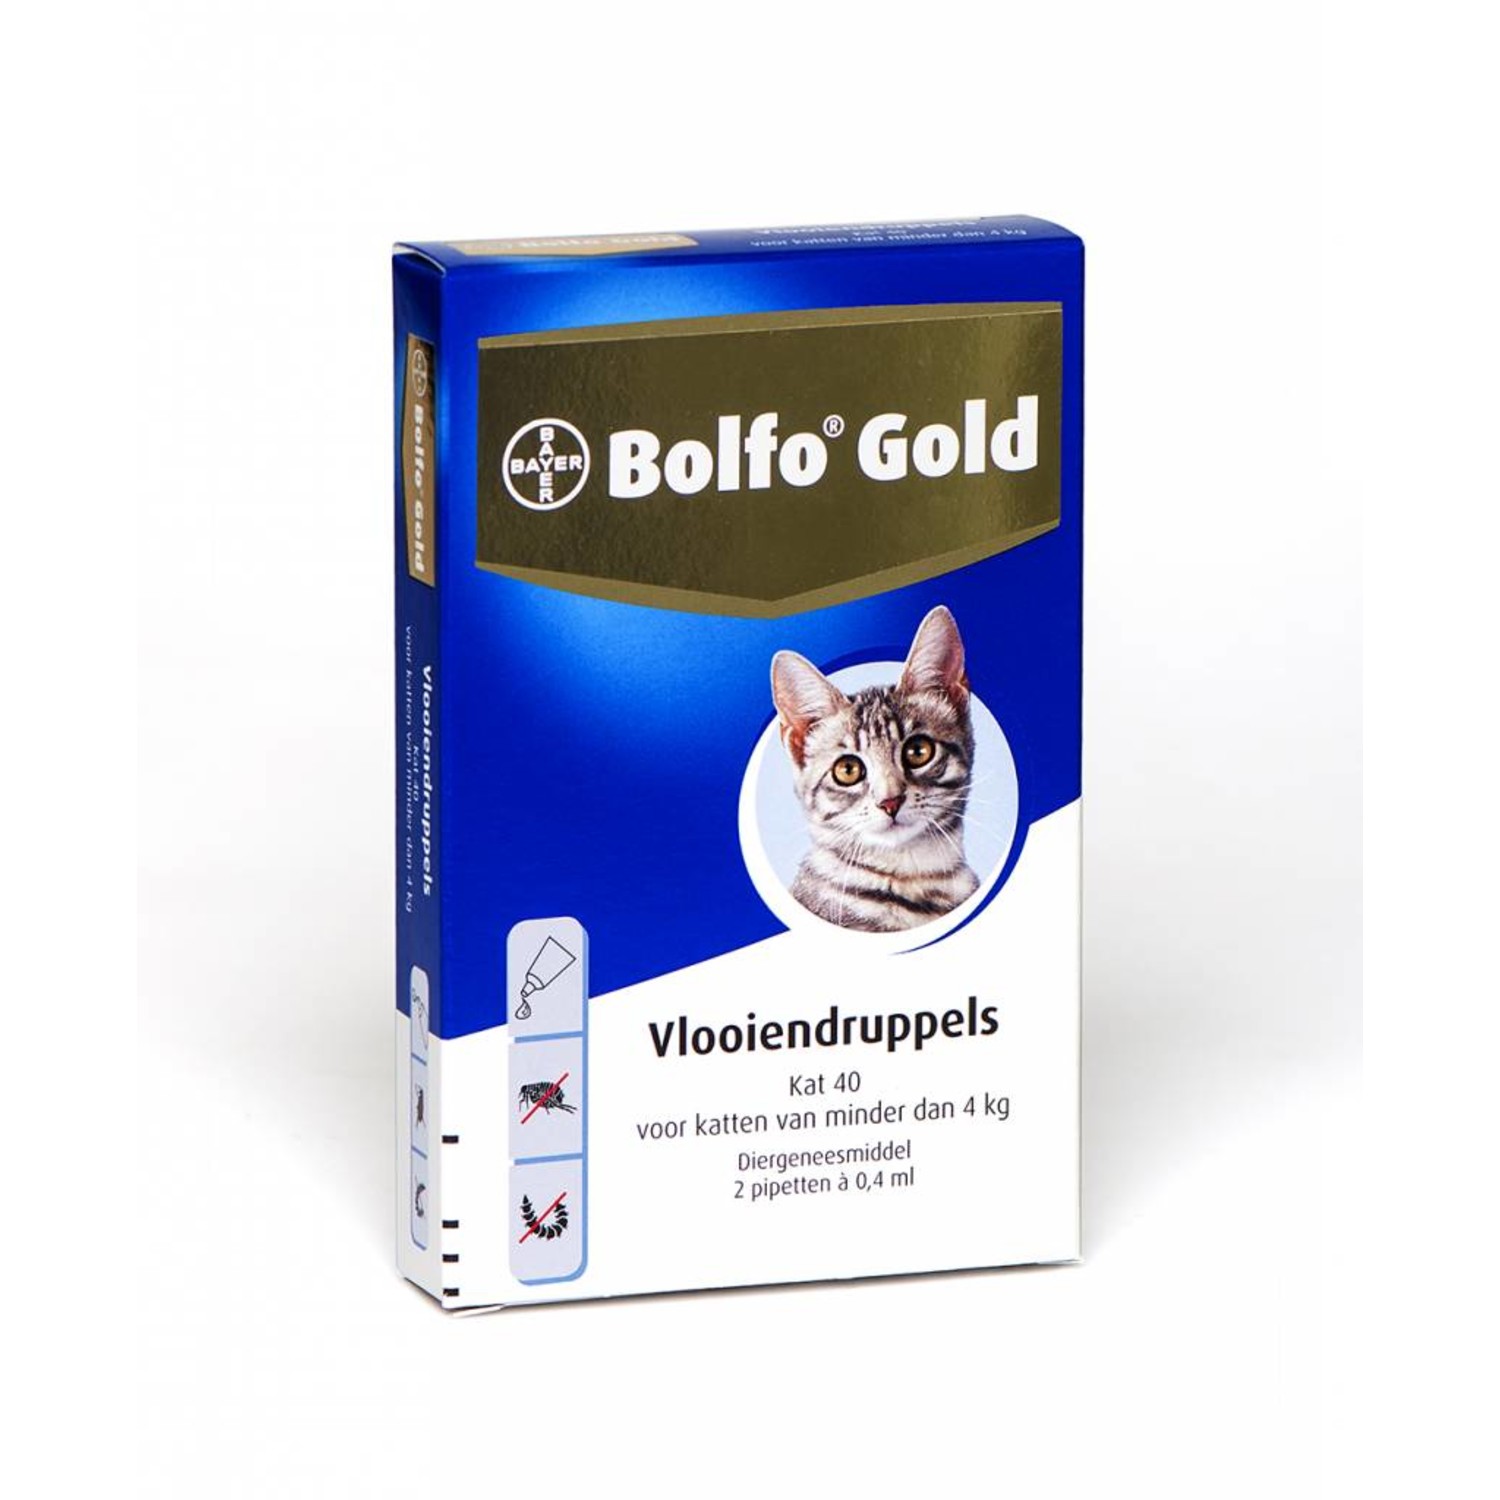 Vriend Chemicaliën kaart Bolfo Gold kat 40 (2 pipet) - dierportiek